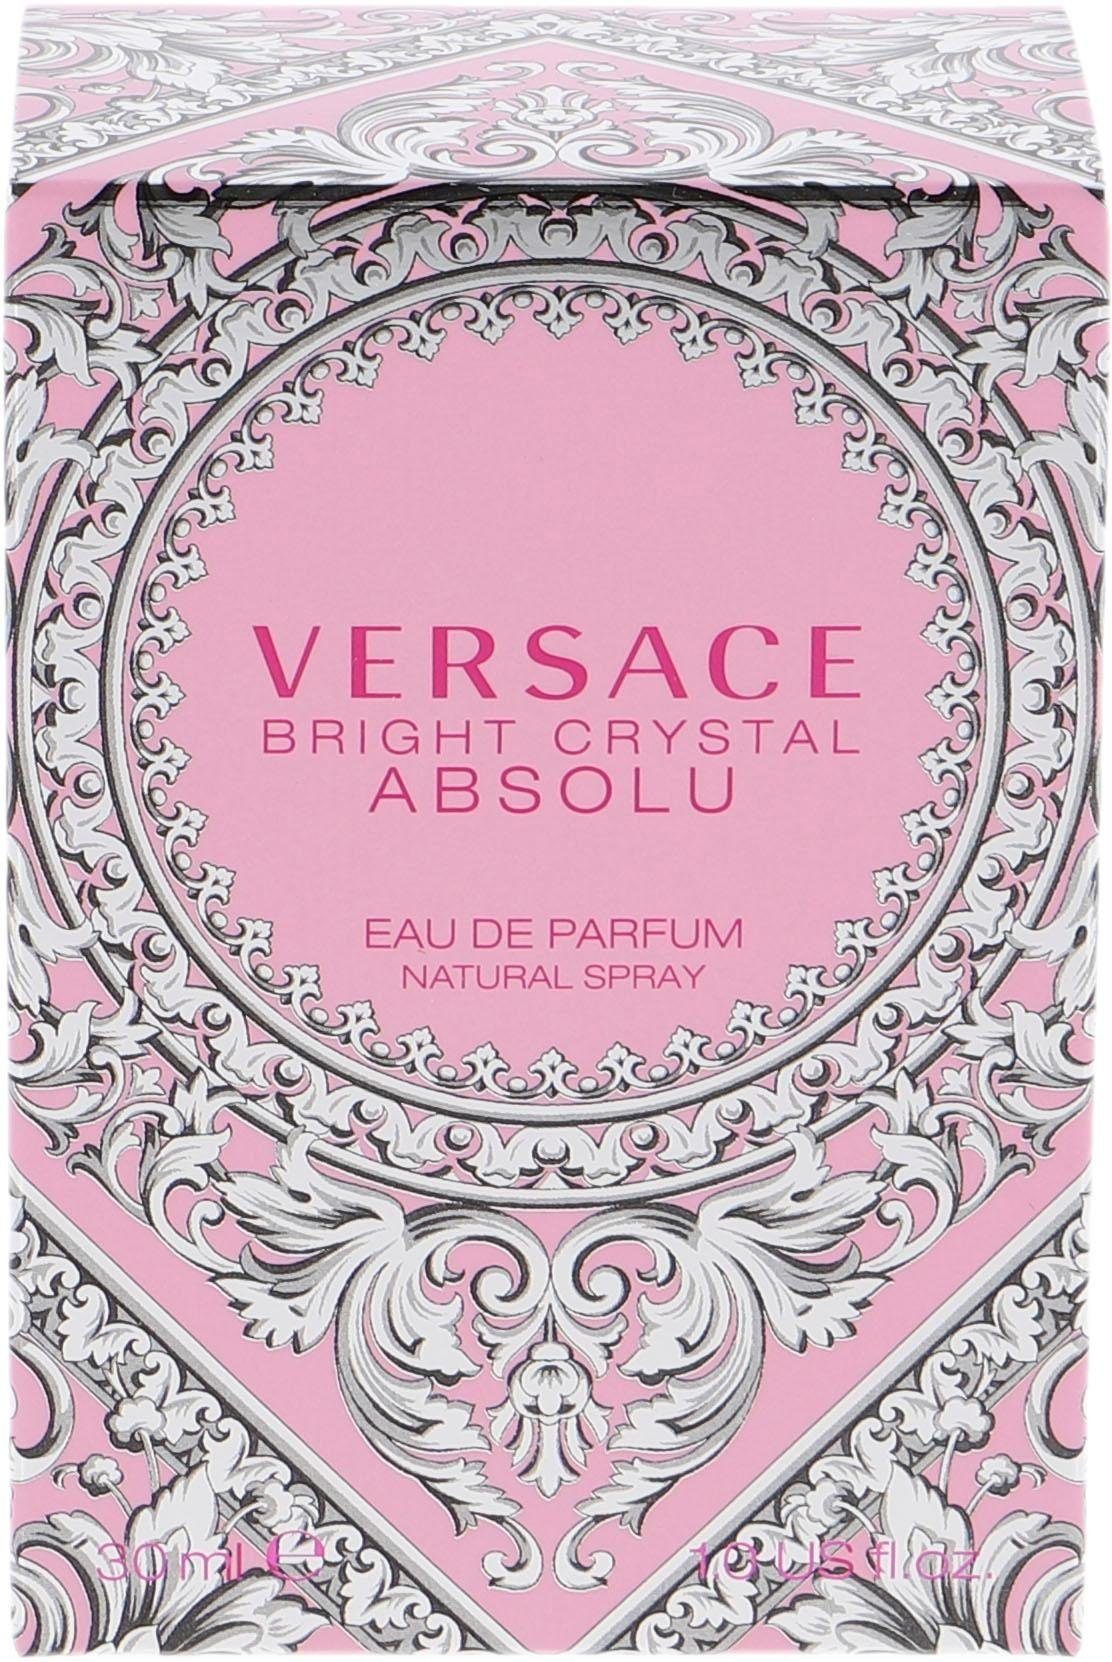 Versace Eau de Parfum Crystal Versace Bright Absolu